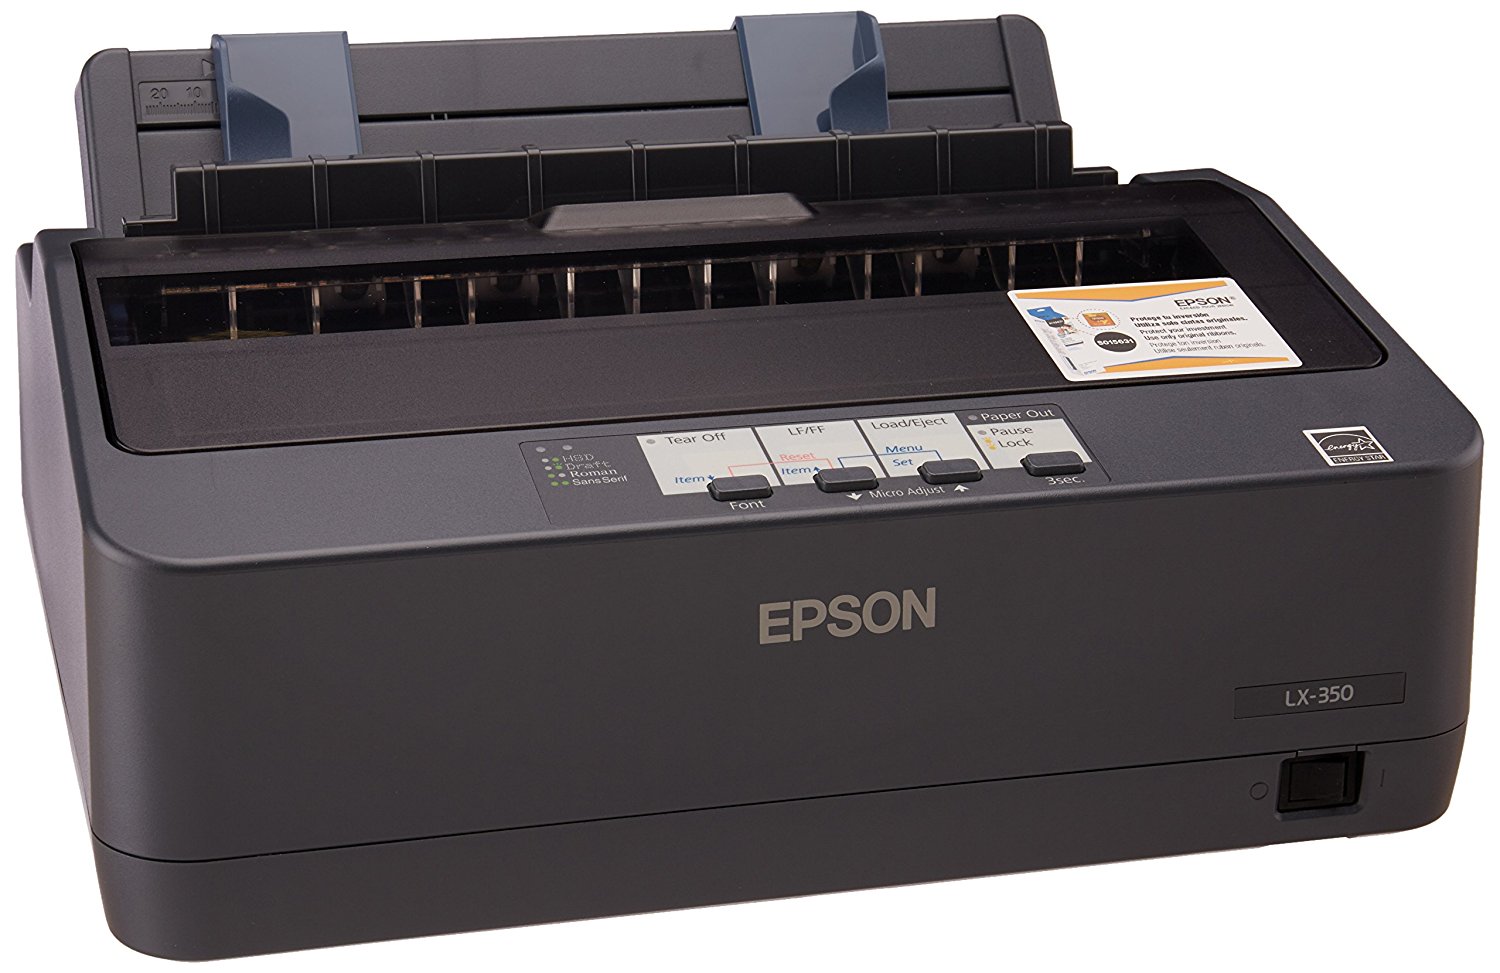 Product image - Epson LX350 Dot Matrix Printer: 9Pin/347 cps/Text Mode/1+4 printing/Bi-Directional/400million strike head
life/10,000 POH